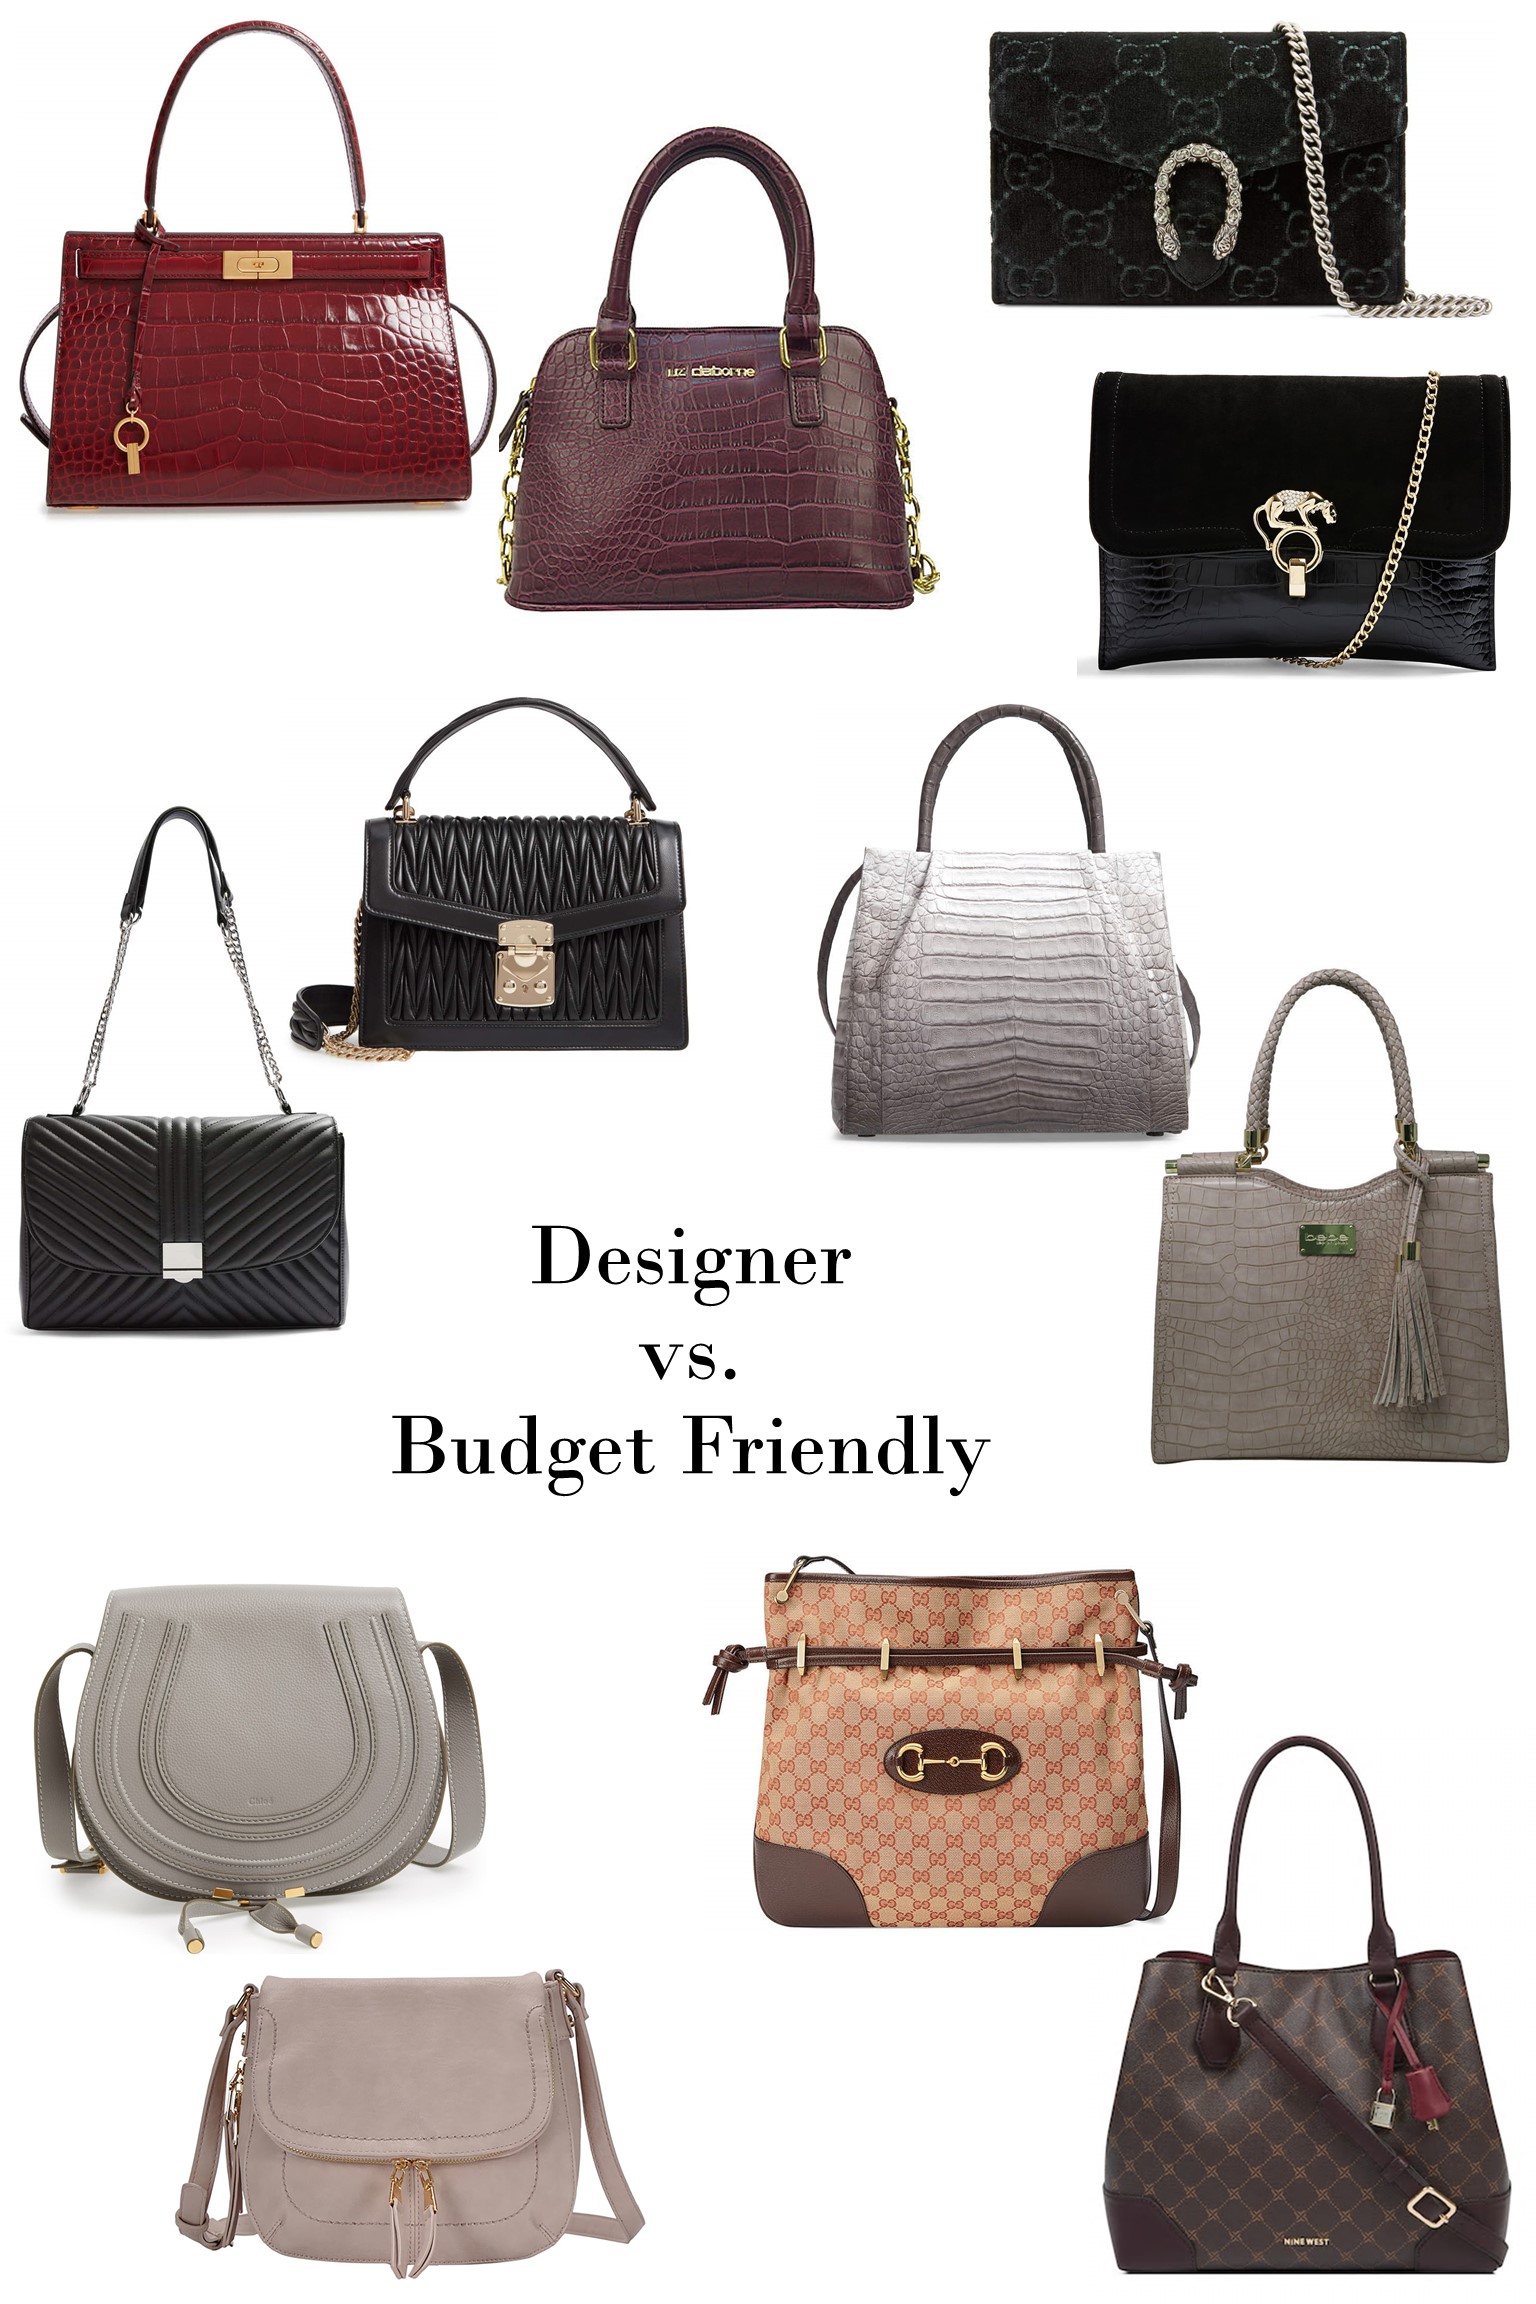 Designer vs. Budget Friendly Handbags